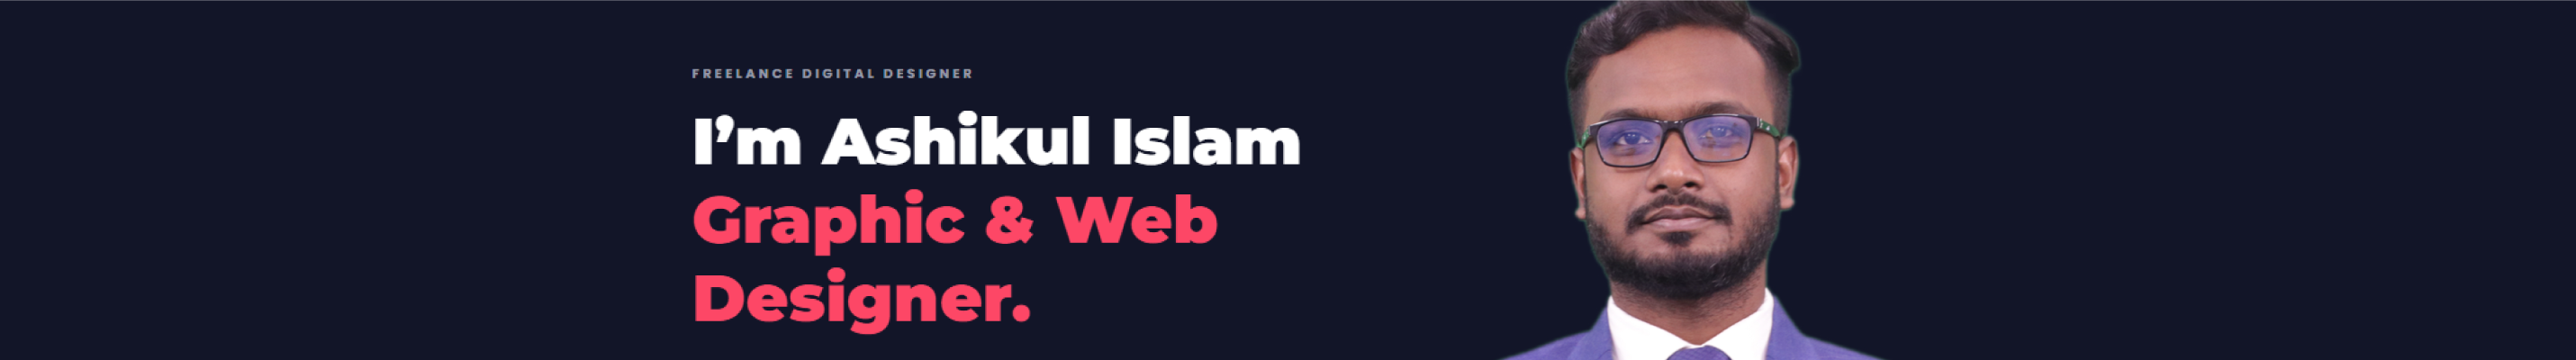 Ashikul Islam's profile banner